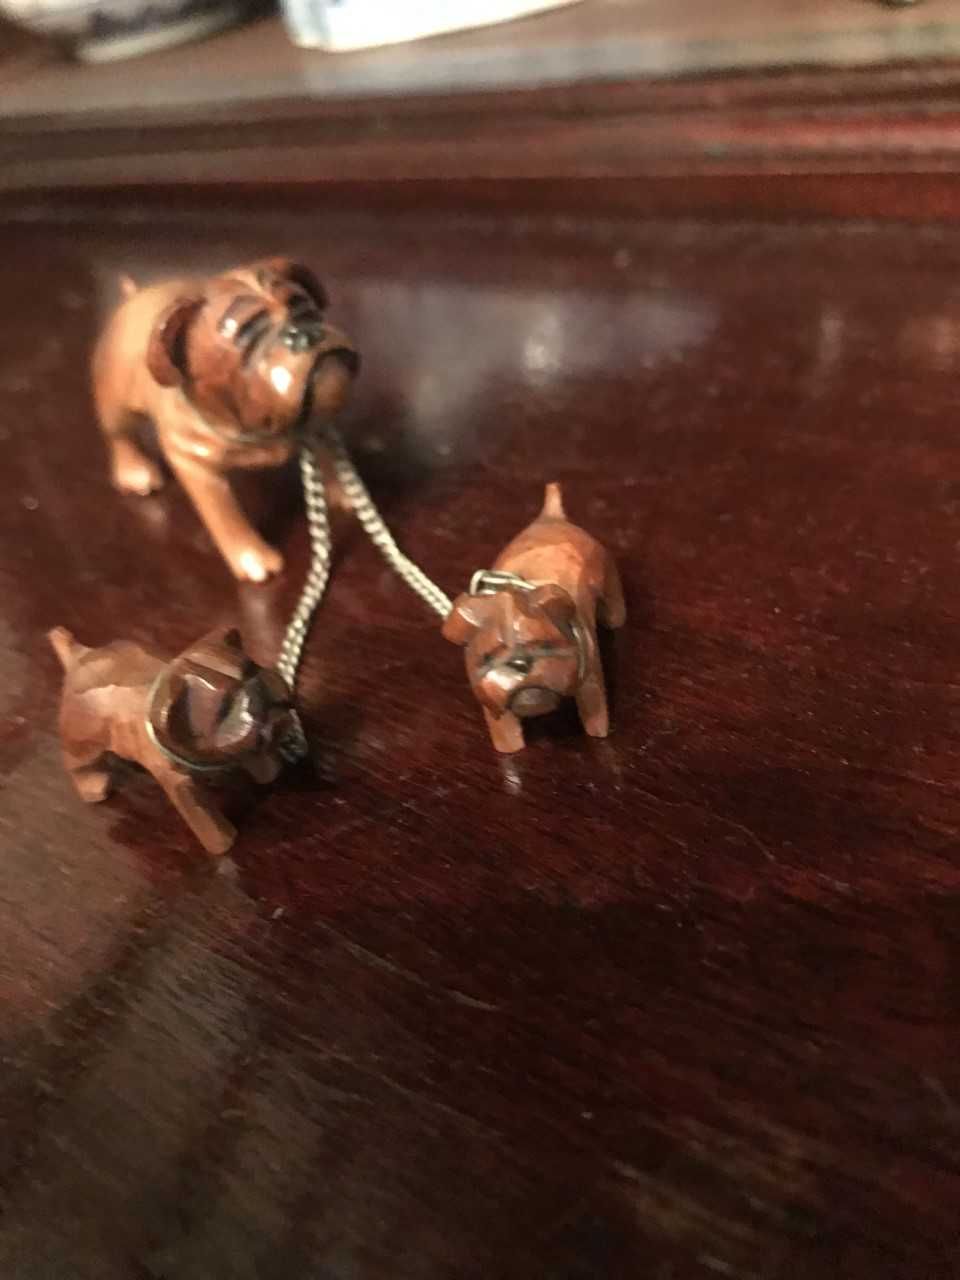 Miniatura antigas : buda, ostra,i greja ortodoxa, cavalo, cães